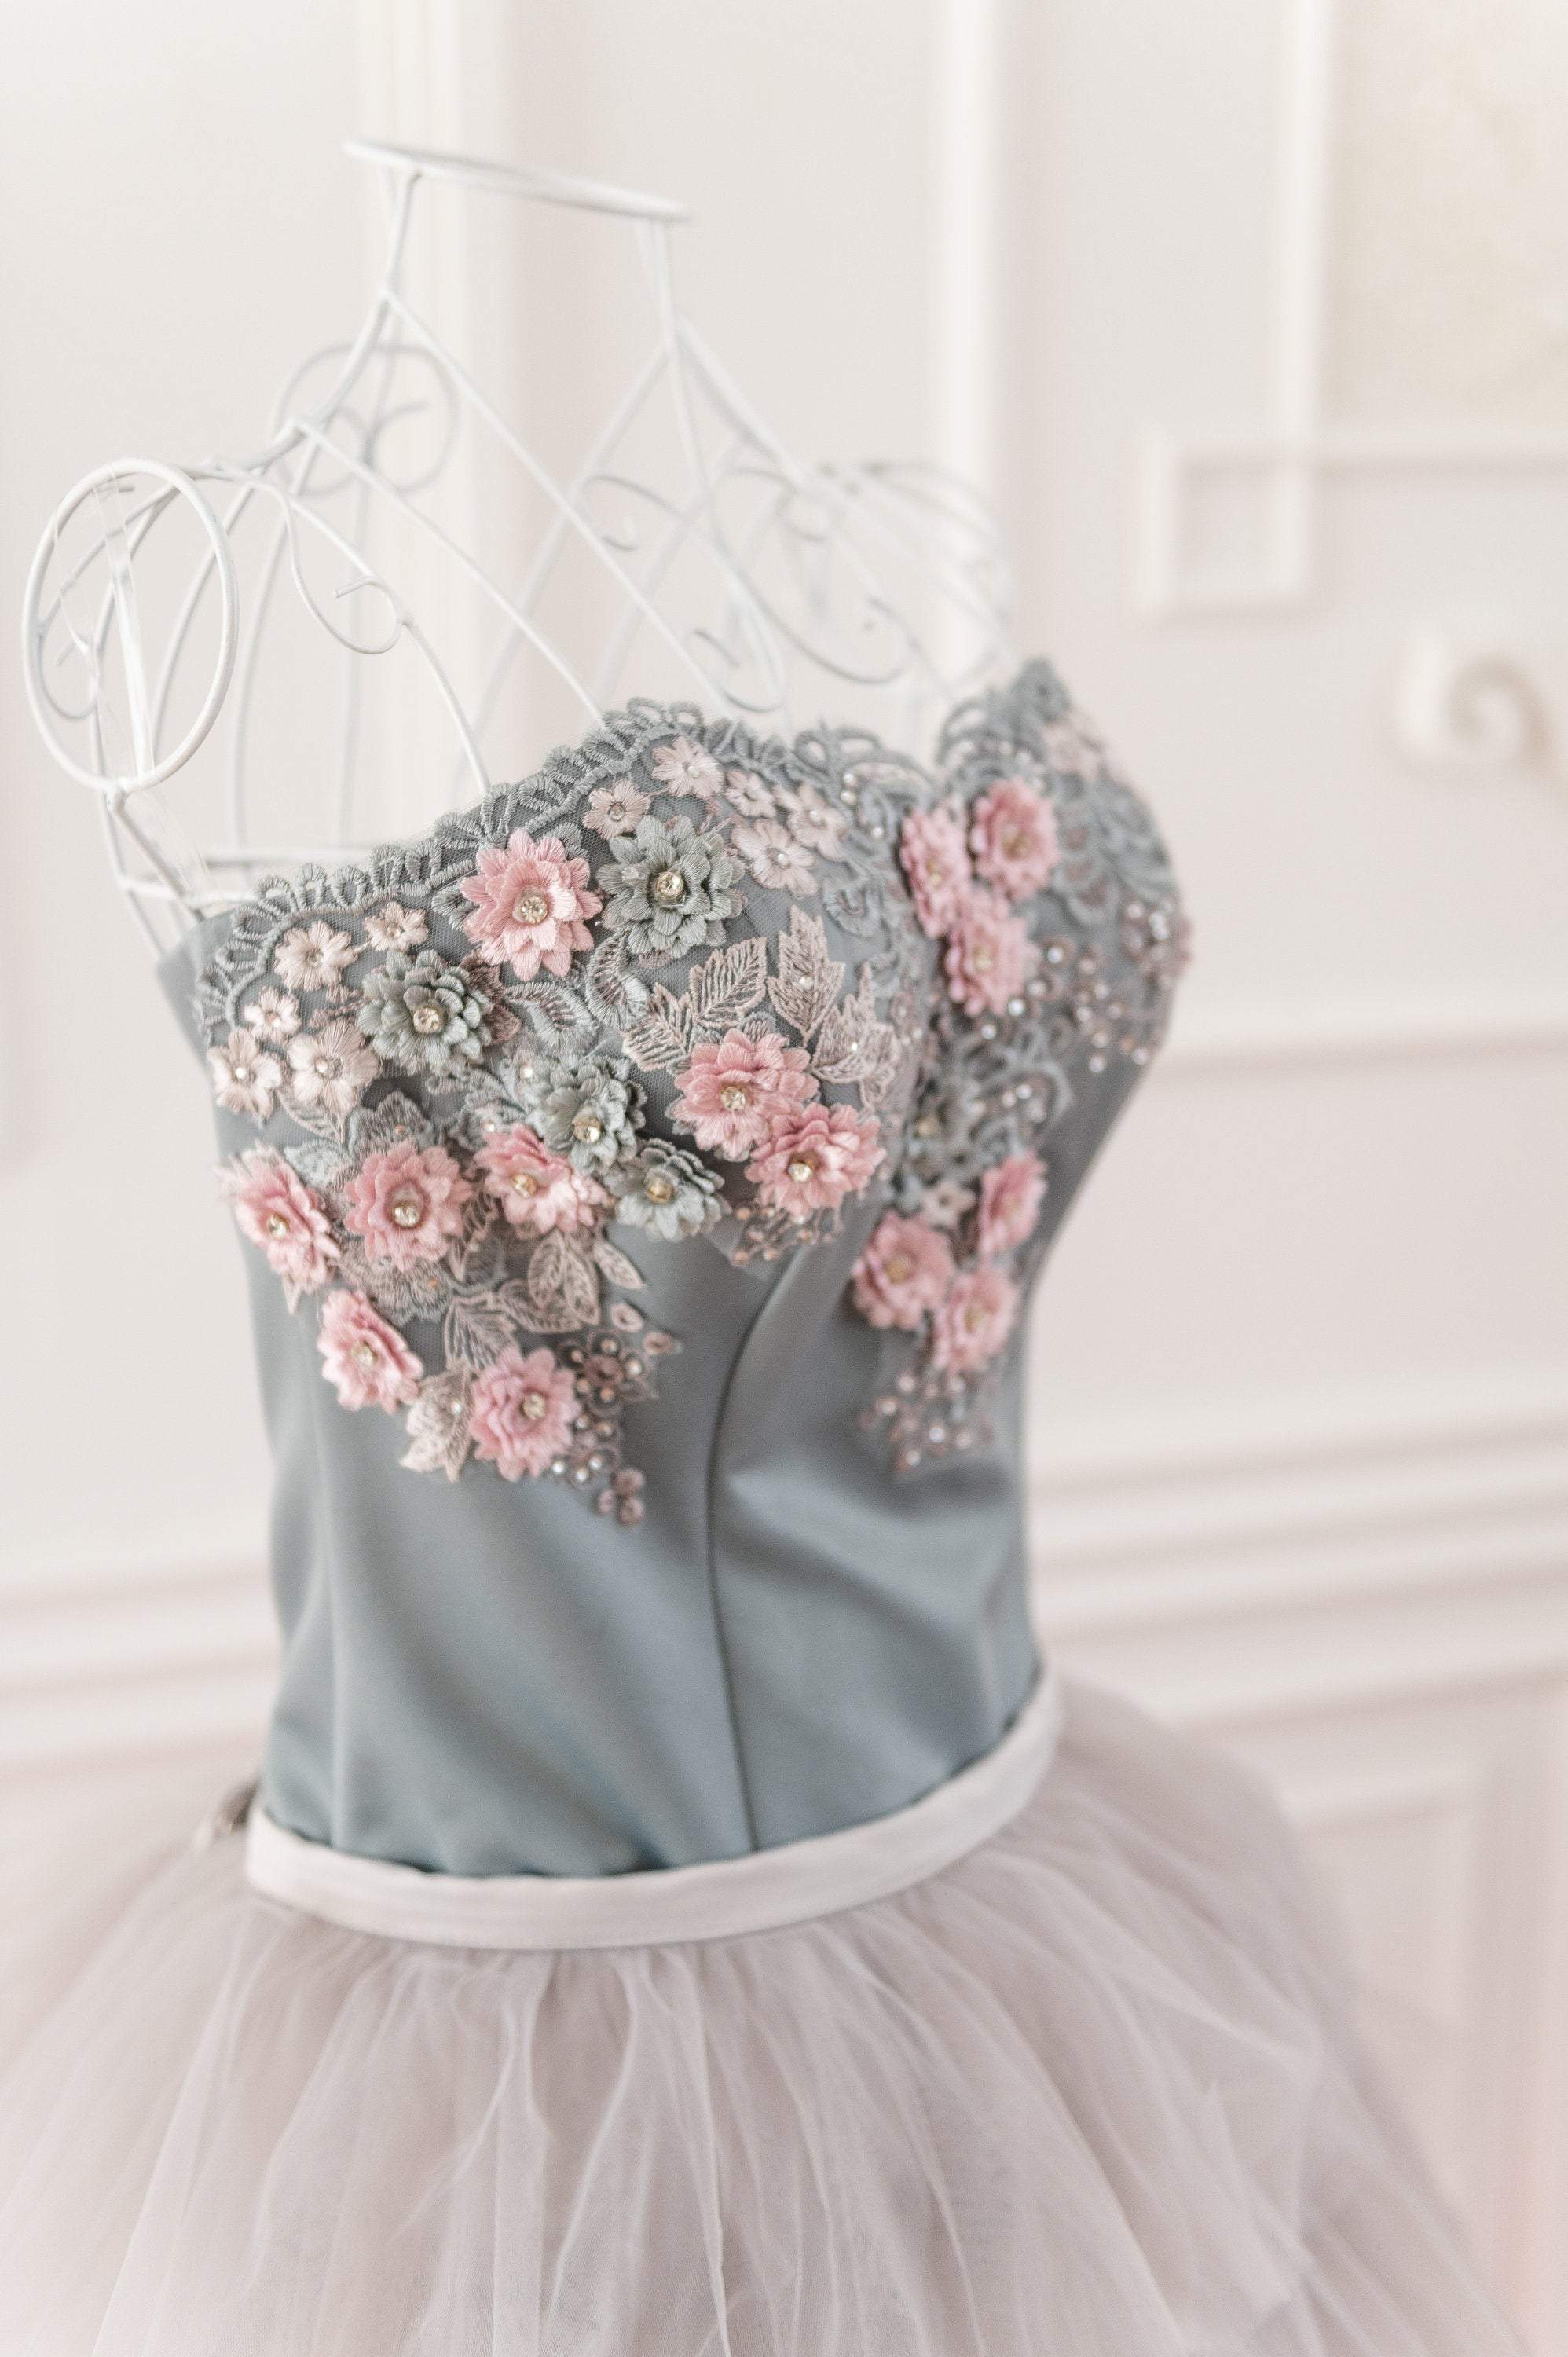 13 Infinity Bridesmaid Dress Set, Pink, Grey Convertible Dresses, Wedding  Party Gift, Infinity Wedding Dress